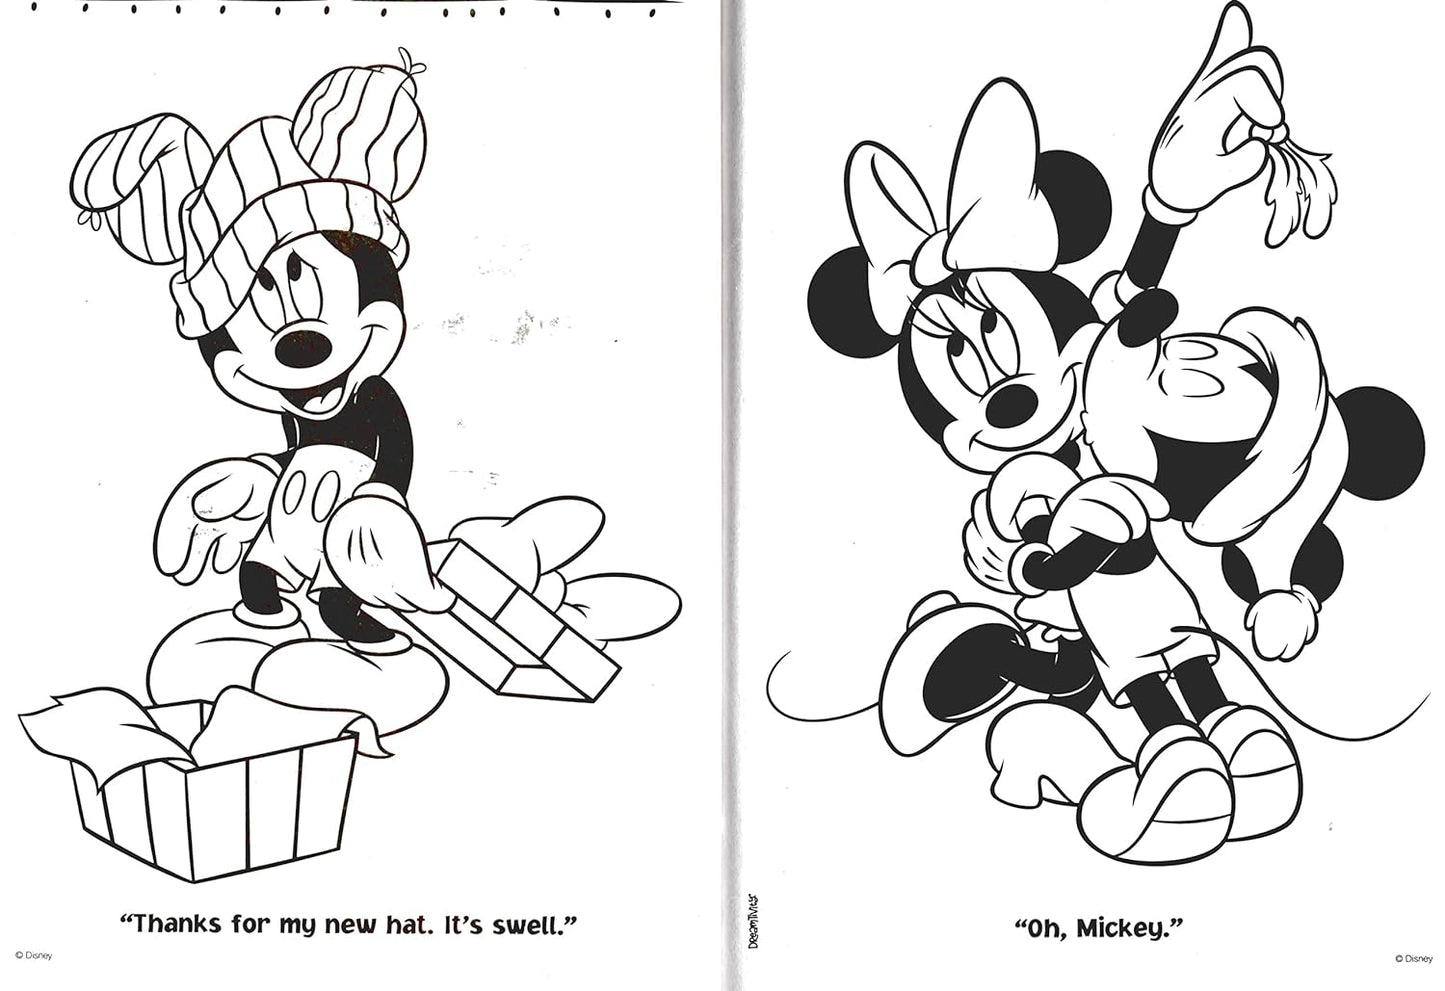 Disney Junior Mickey - Jolly Holiday - Christmas Edition Holiday - Coloring Book